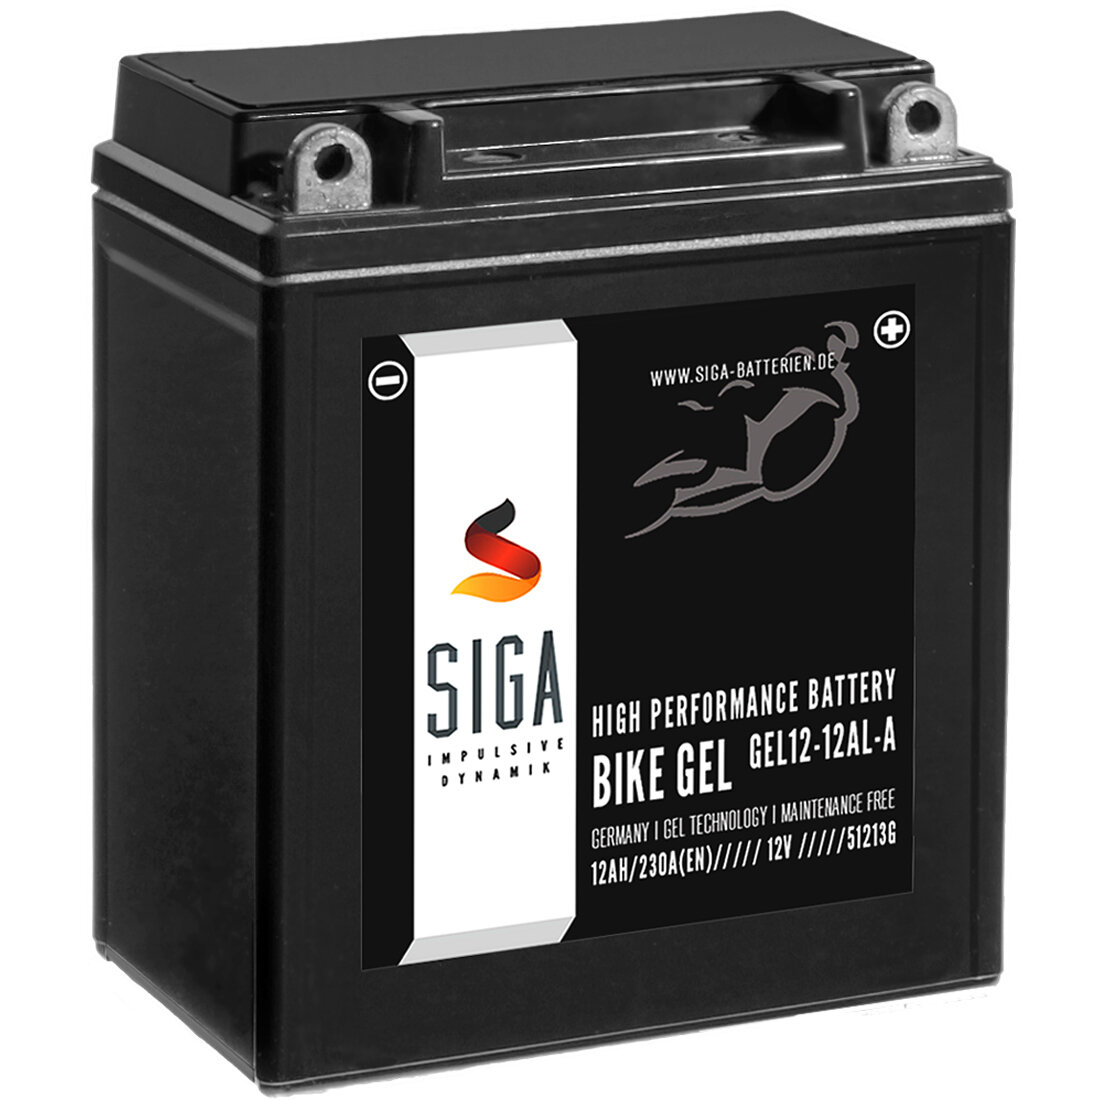 SIGA Bike Gel Motorrad Batterie YB12AL-A2 12Ah 12V, 48,89 €